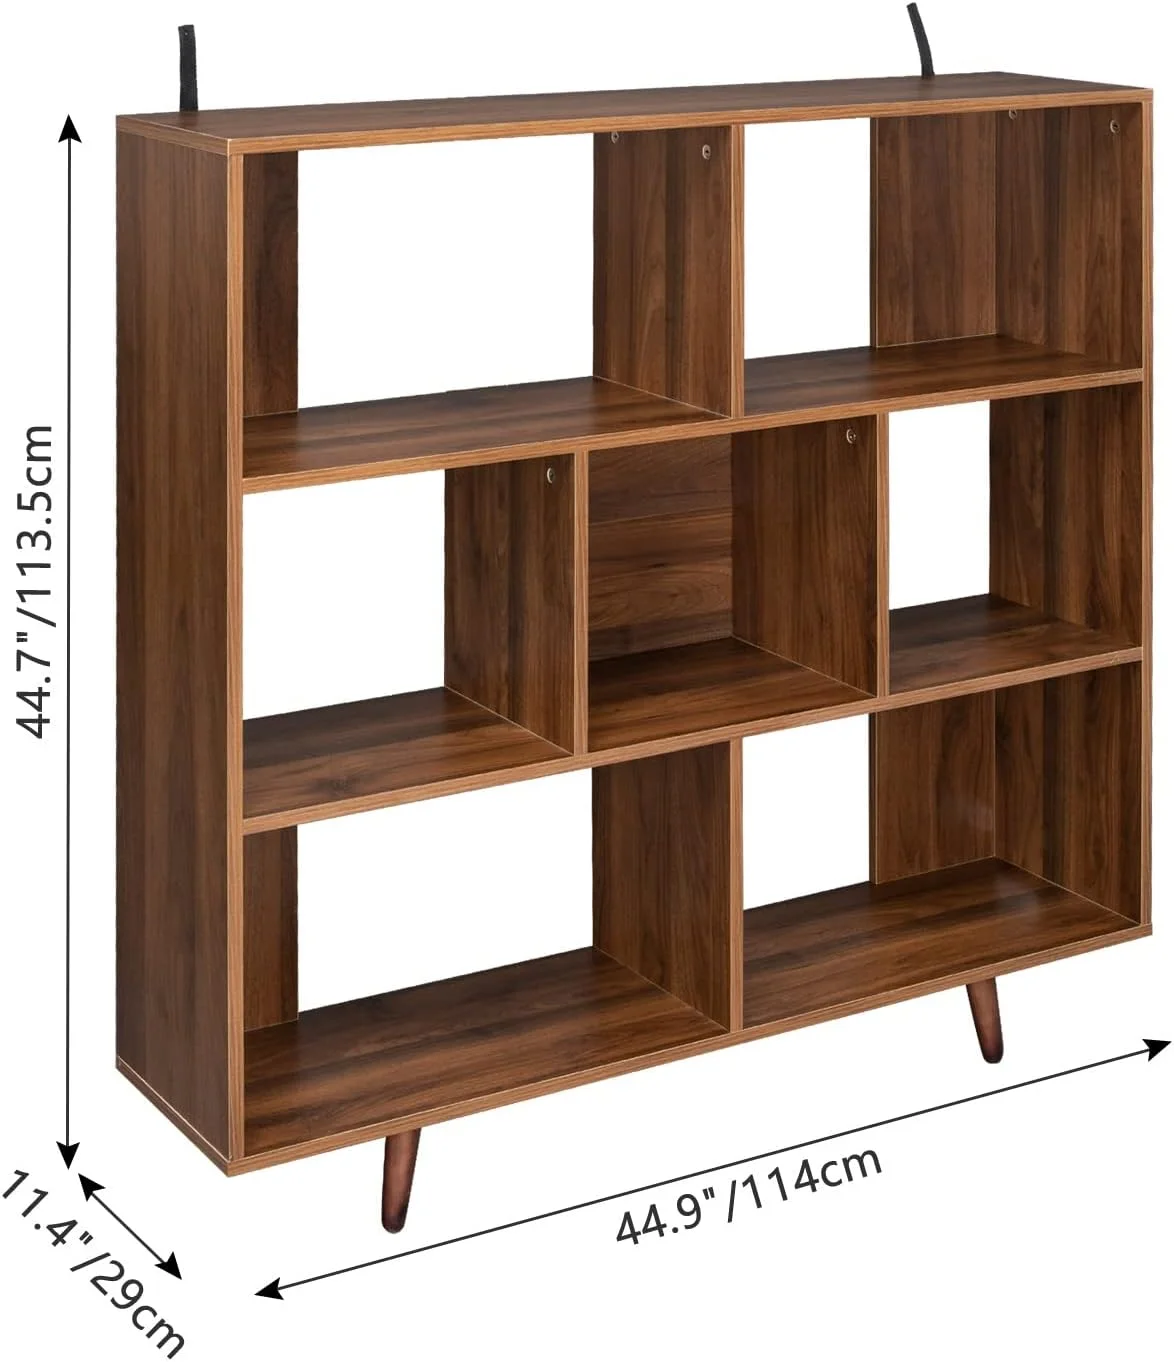 Hot Selling Modern Style 5-Tier Bookcase modern wooden book shelf display bookshelf for living room furniture